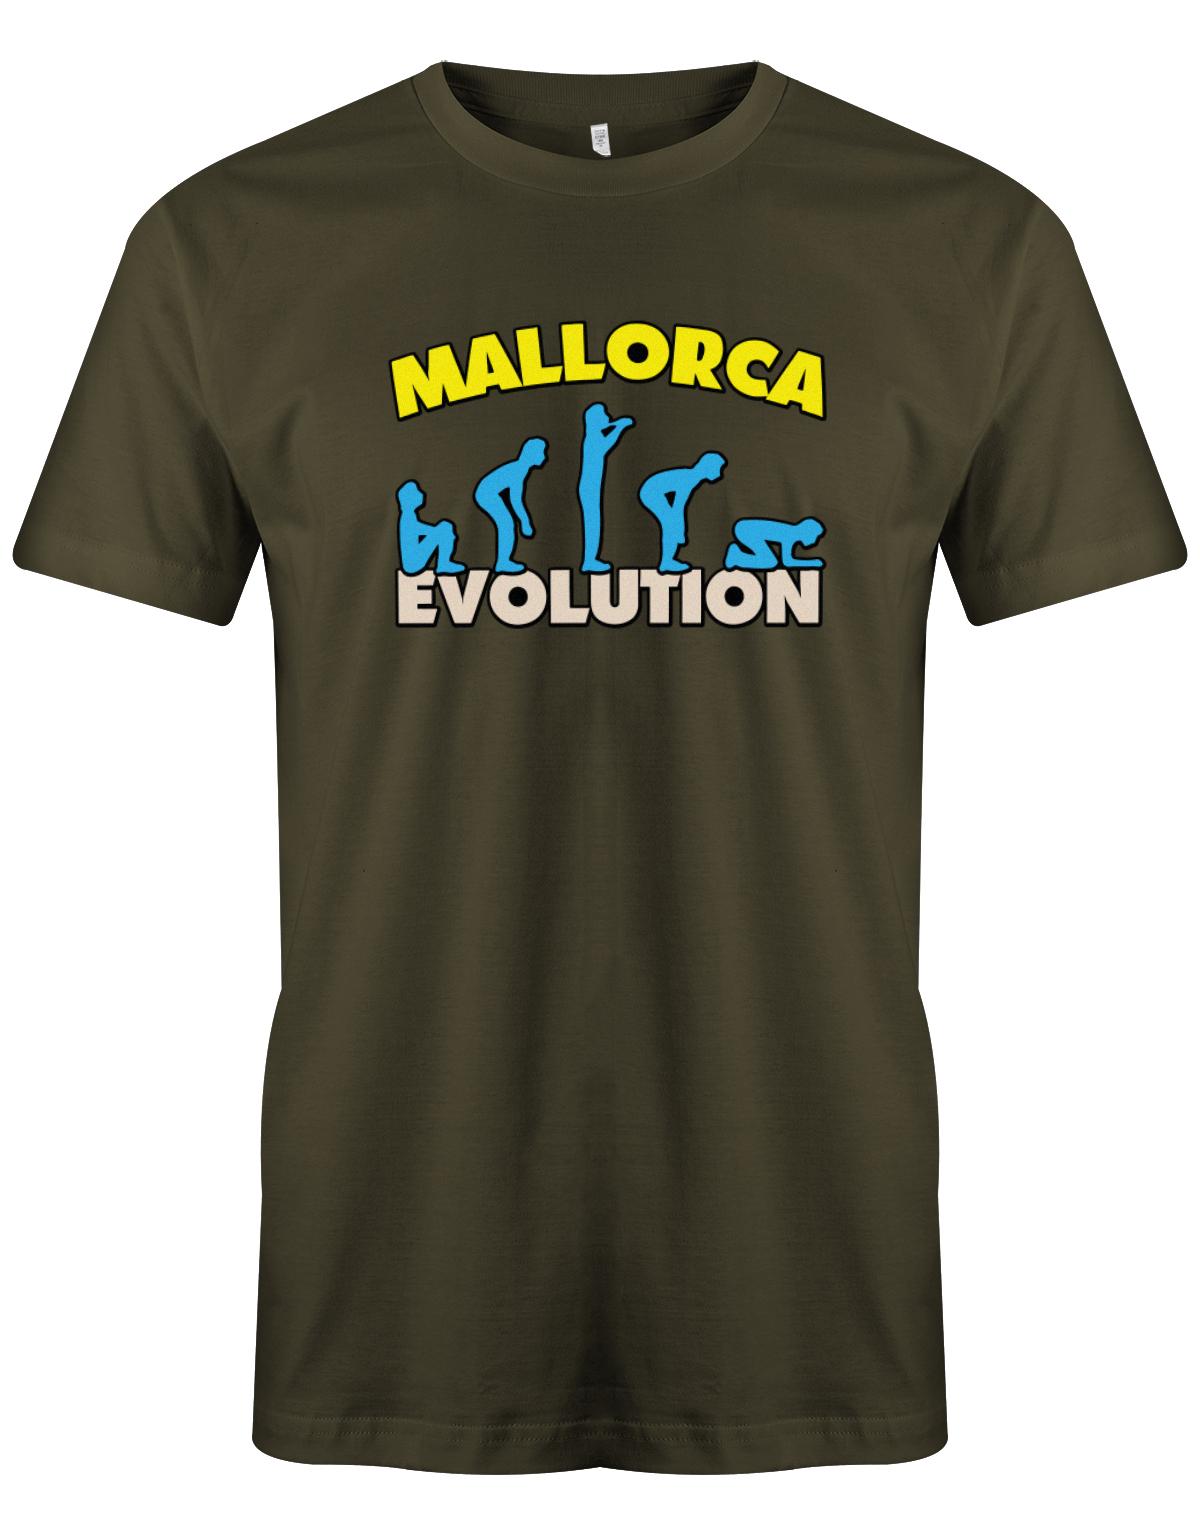 Mallorca-Evolution-Urlaub-Herren-Shirt-Army